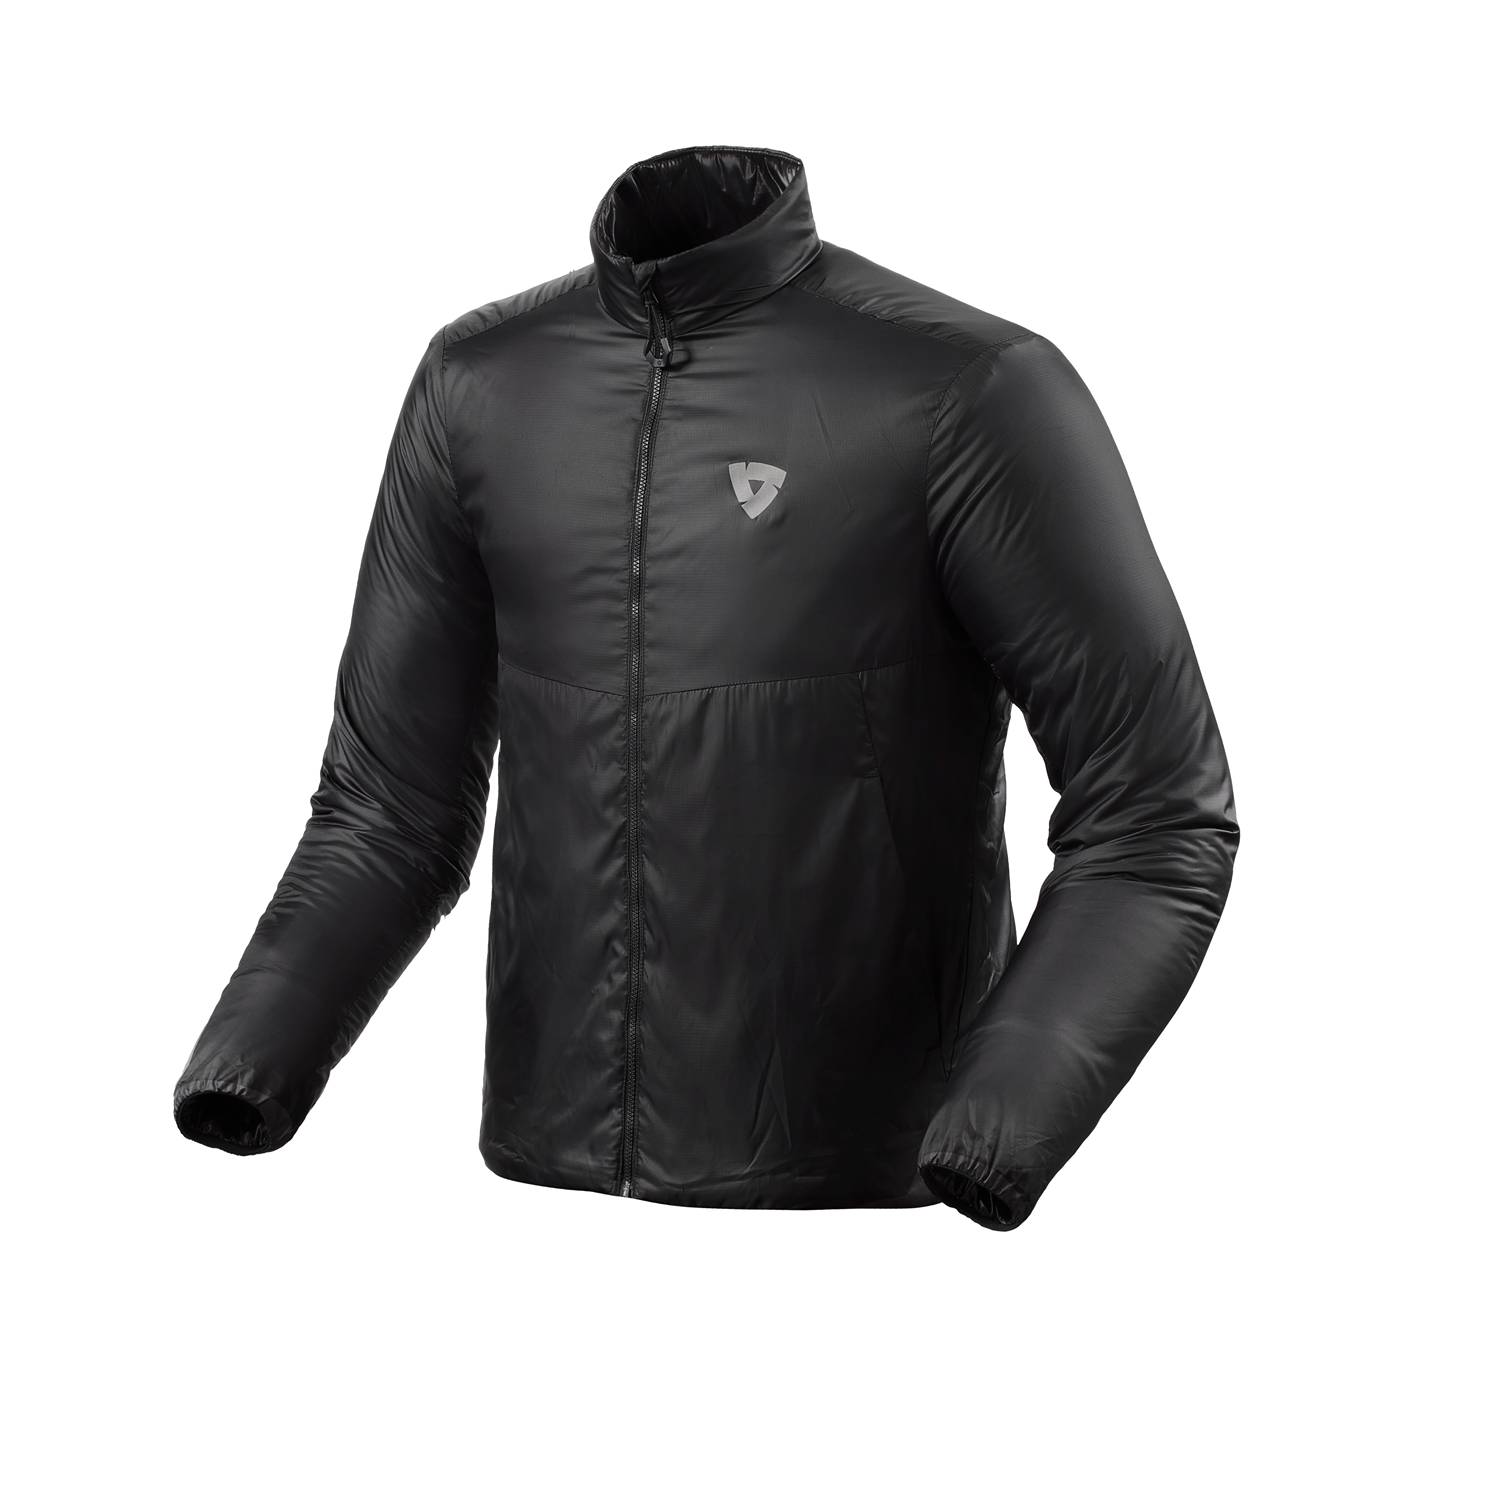 Image of REV'IT! Core 2 Mid Layer Jacket Black Size 3XL EN